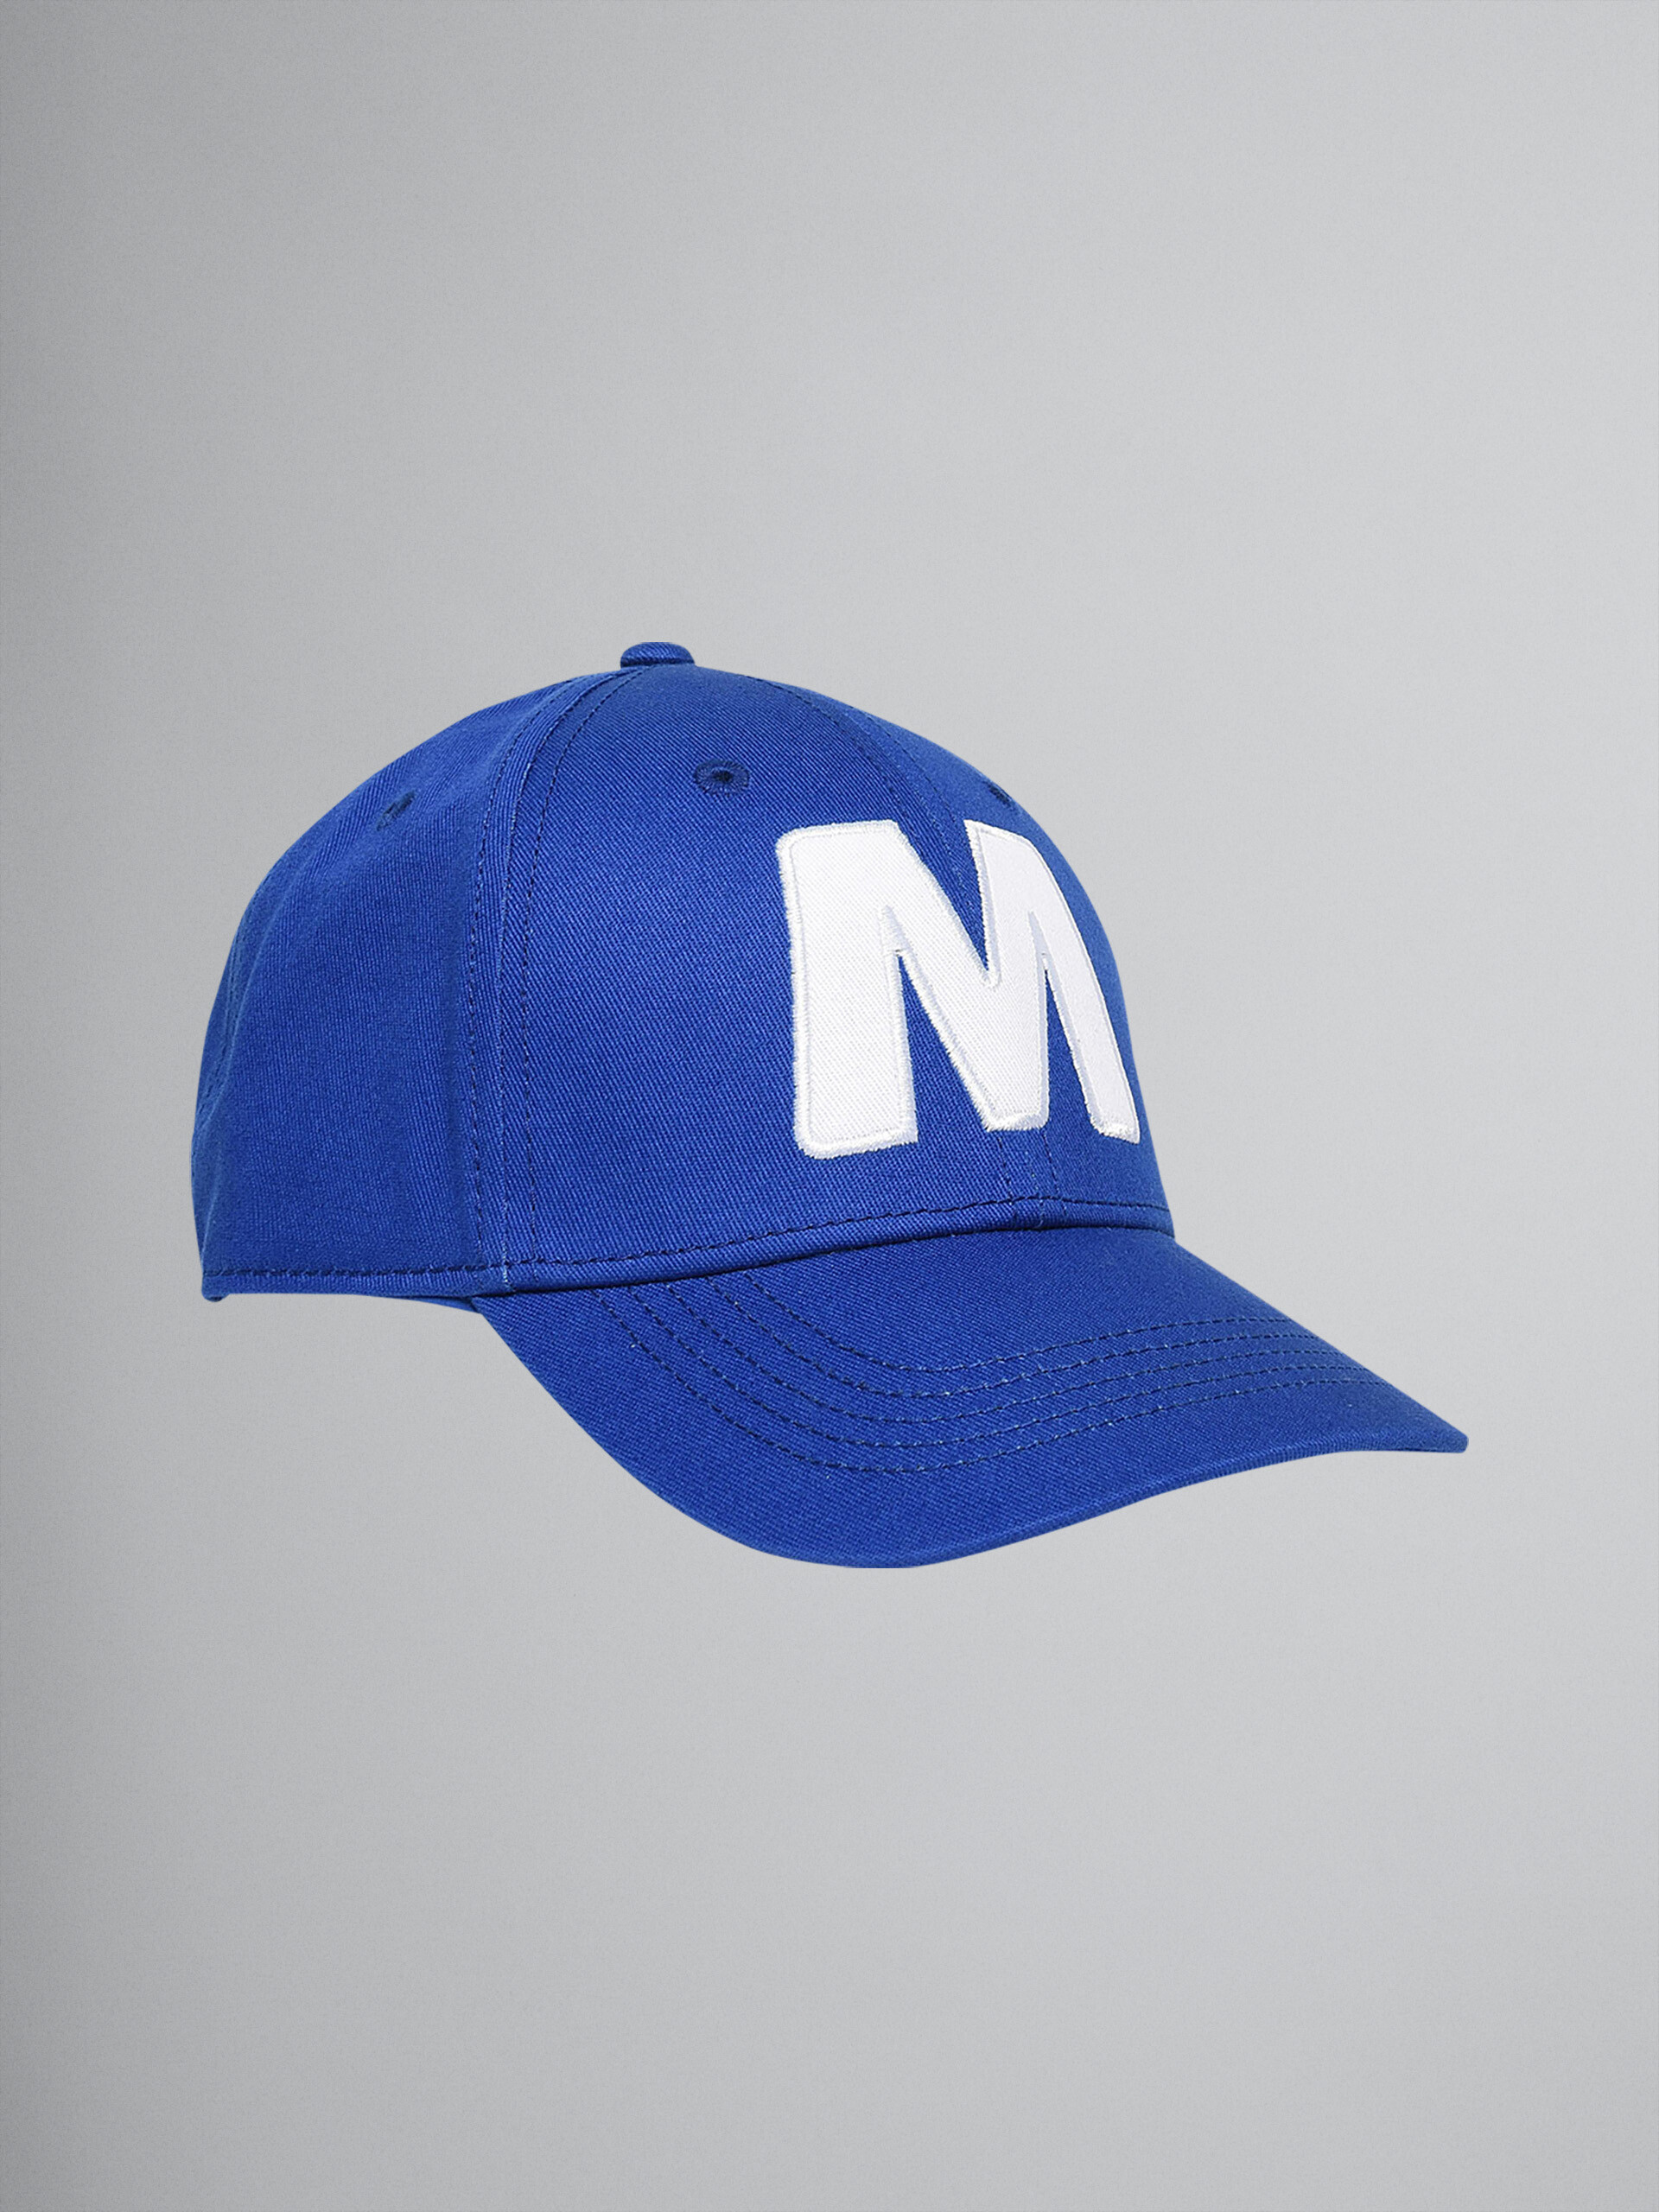 "M" blue cotton gabardine baseball cap - Caps - Image 1